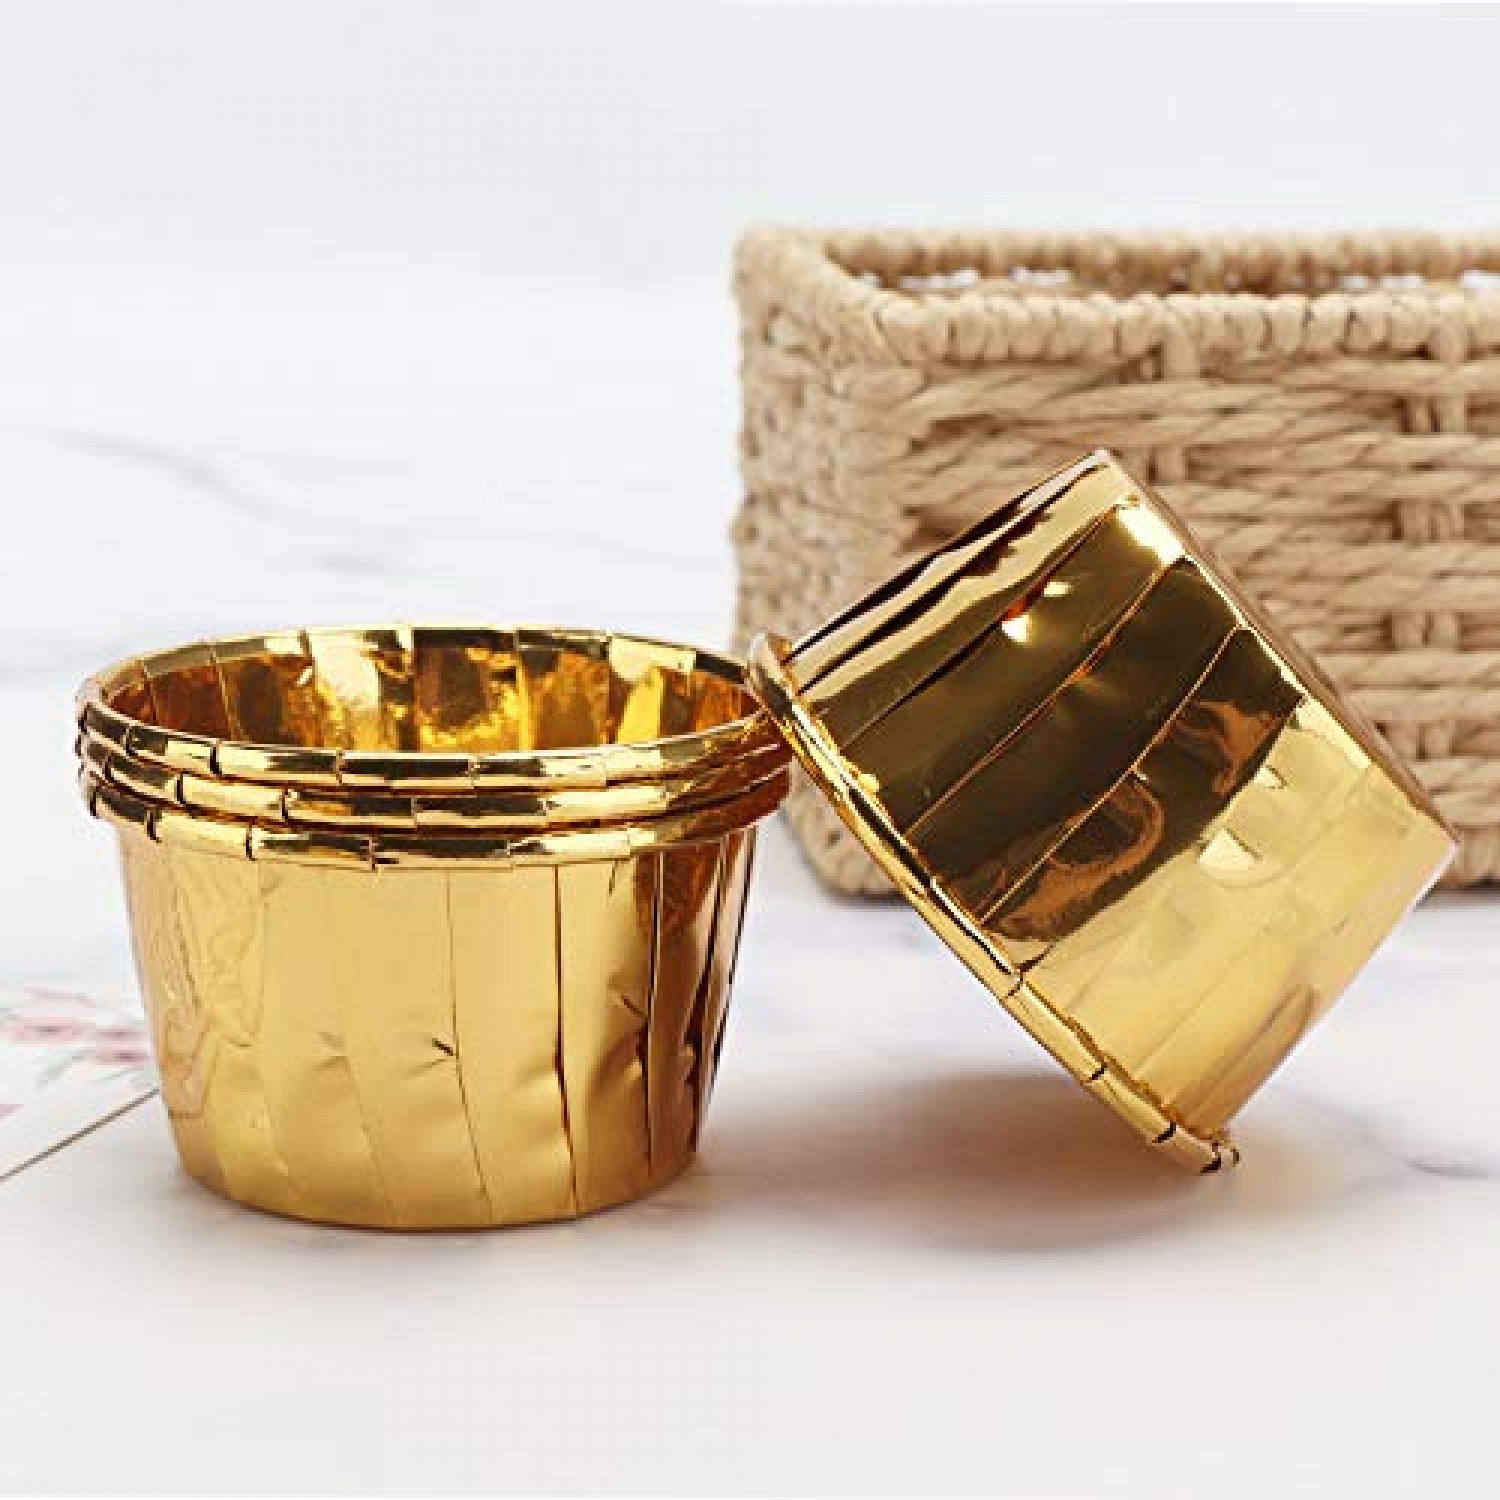 PME Foil Cupcake Liners Metallic Gold 30ct